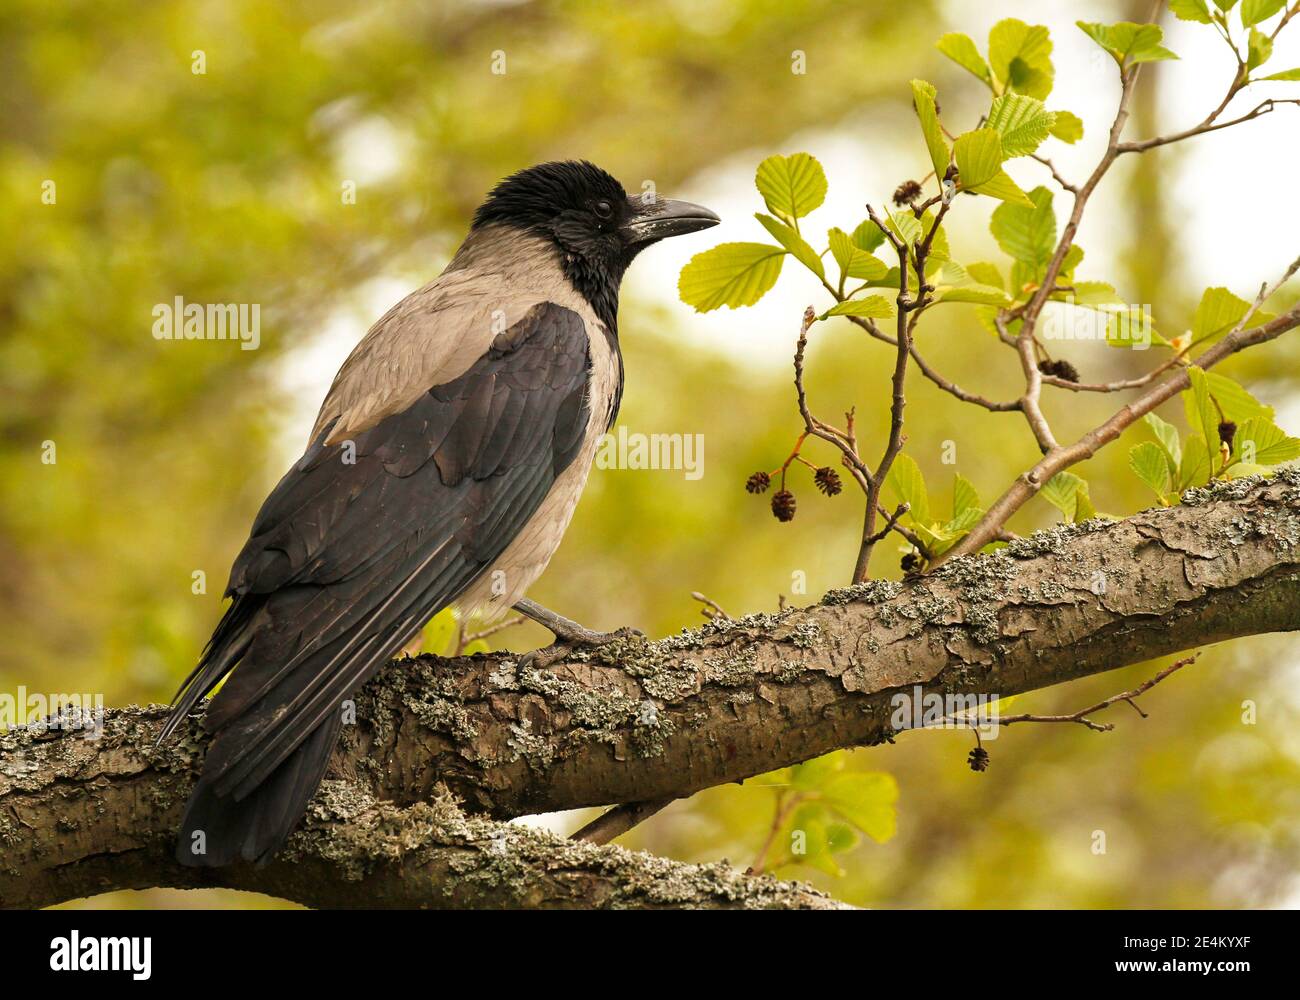 Northern European hooded crow, Corvus corone cornix on a branch of Common alder, Alnus glutinosa, in Finland. Stock Photo